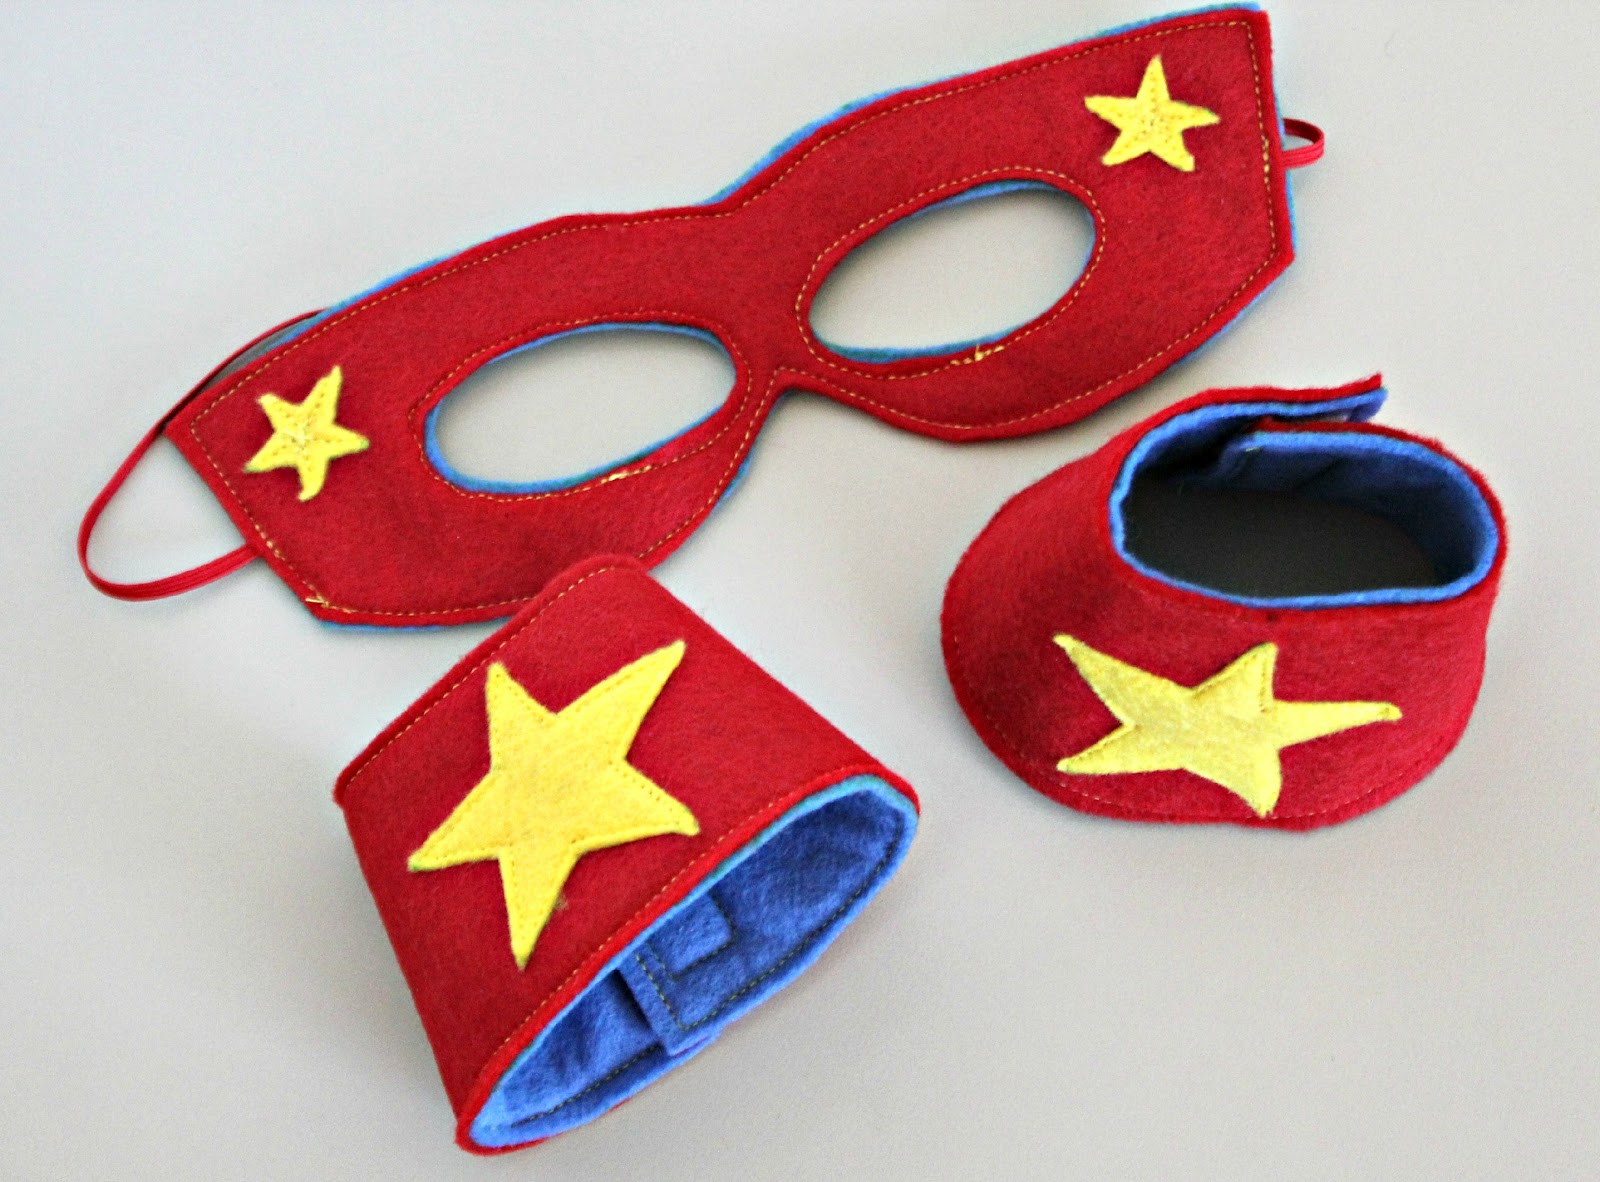 RisC Handmade: Superhero Mask and Cuffs